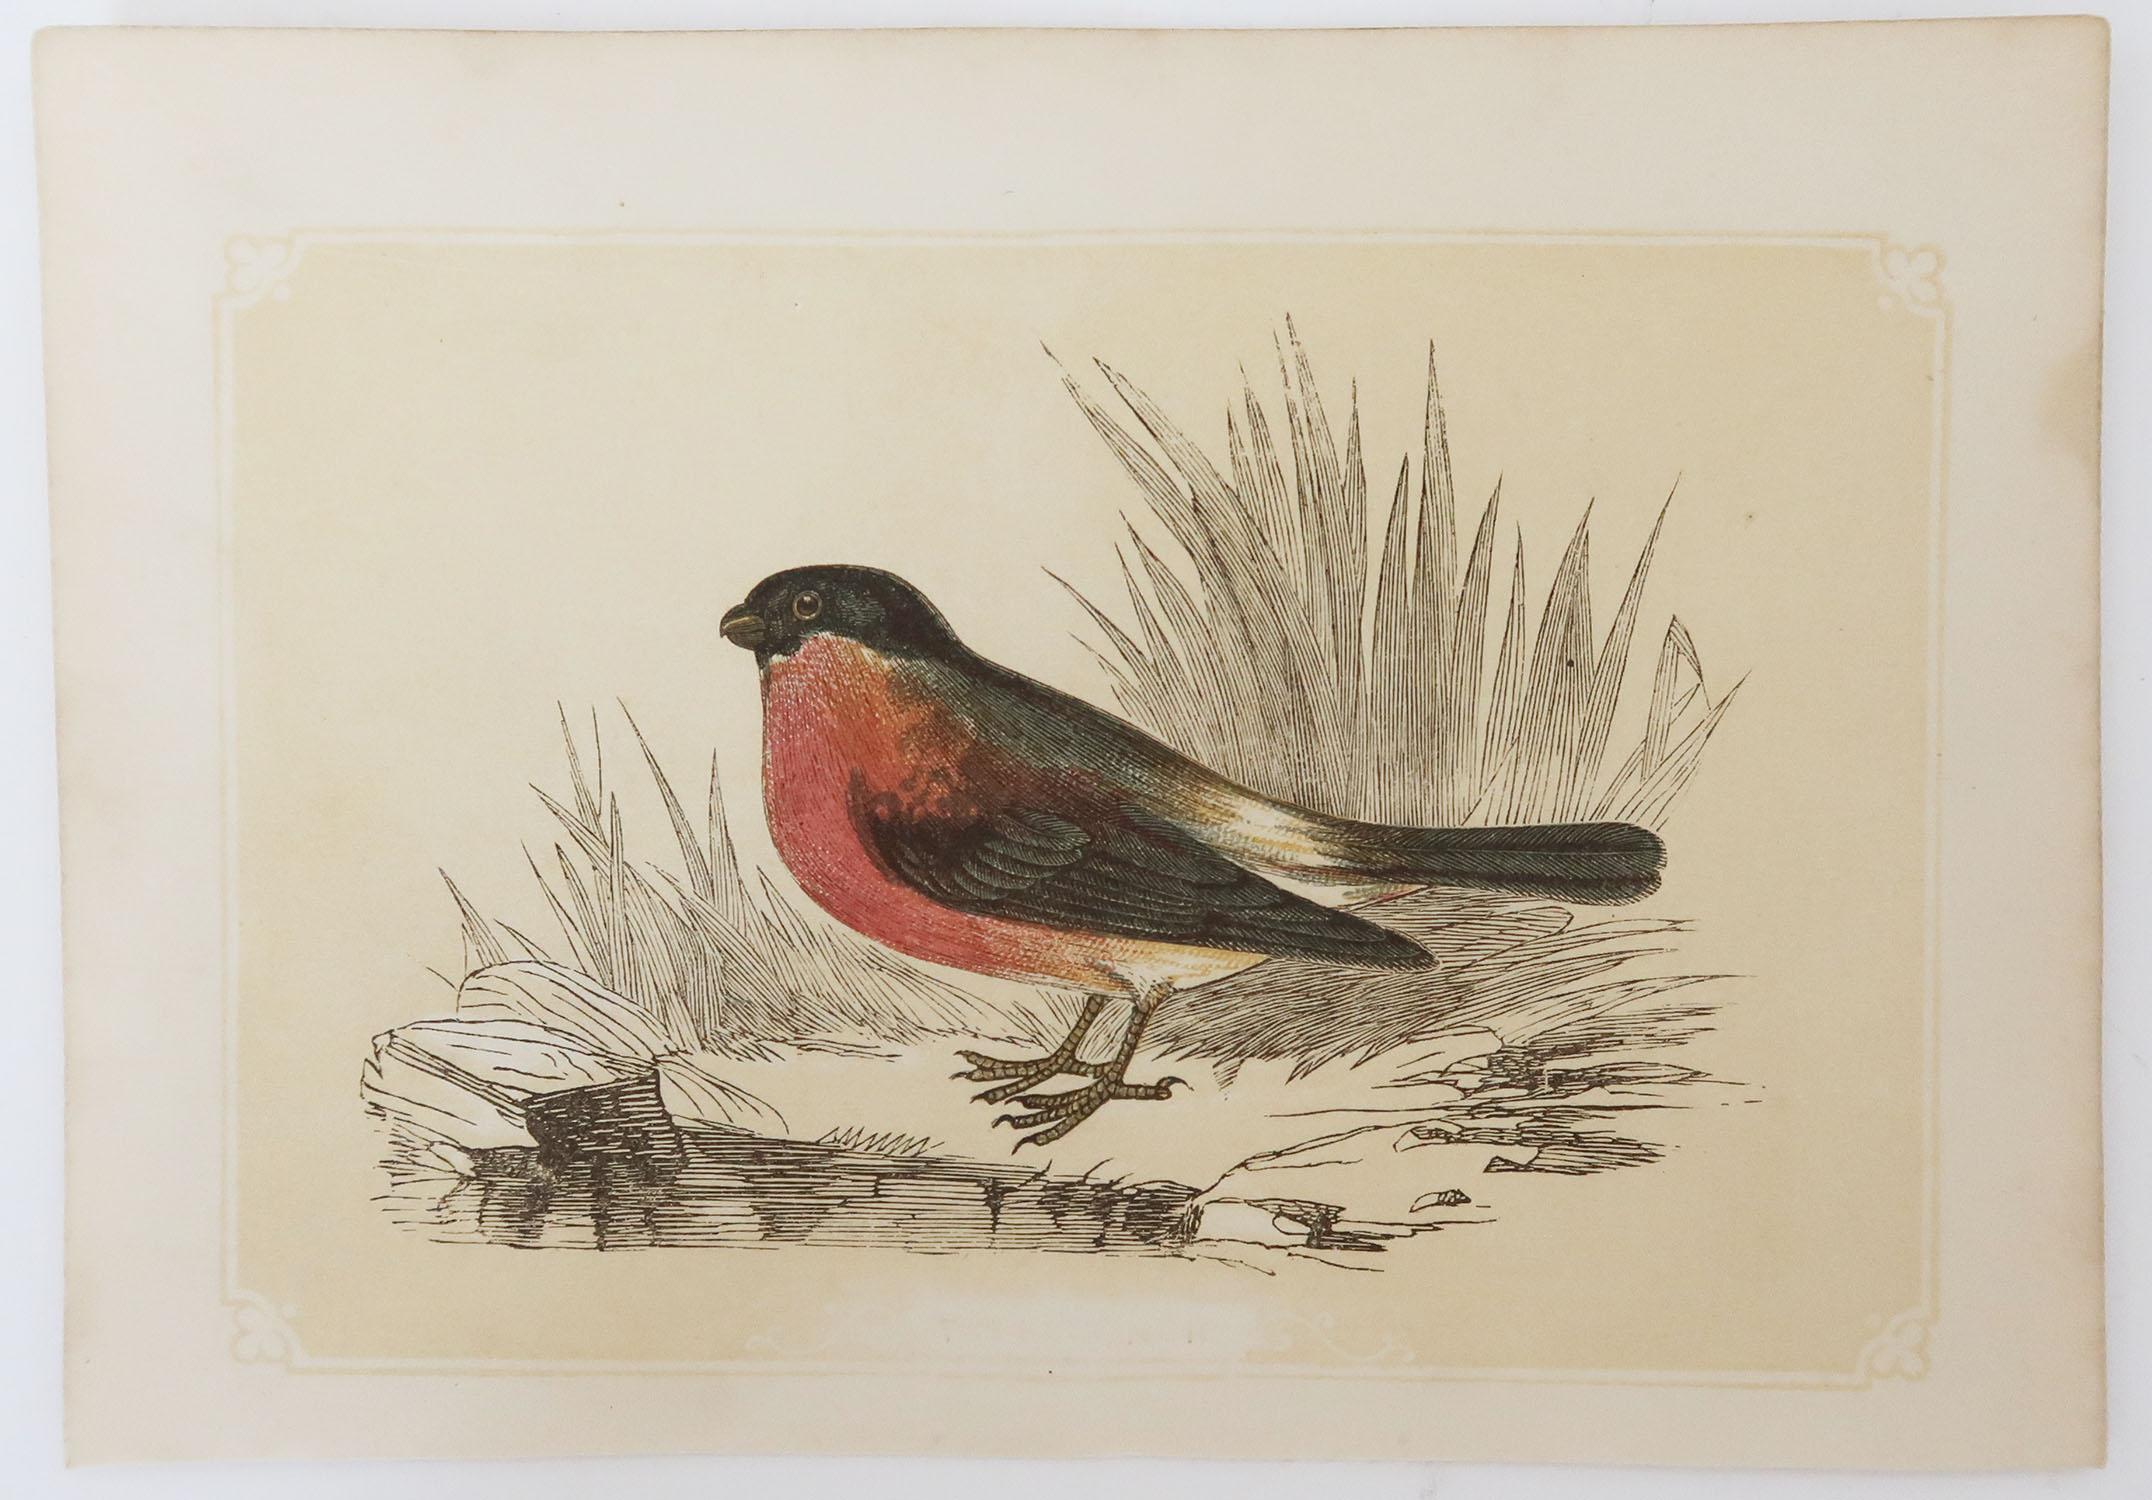 Folk Art Original Antique Bird Print, the Bullfinch, Tallis, circa 1850